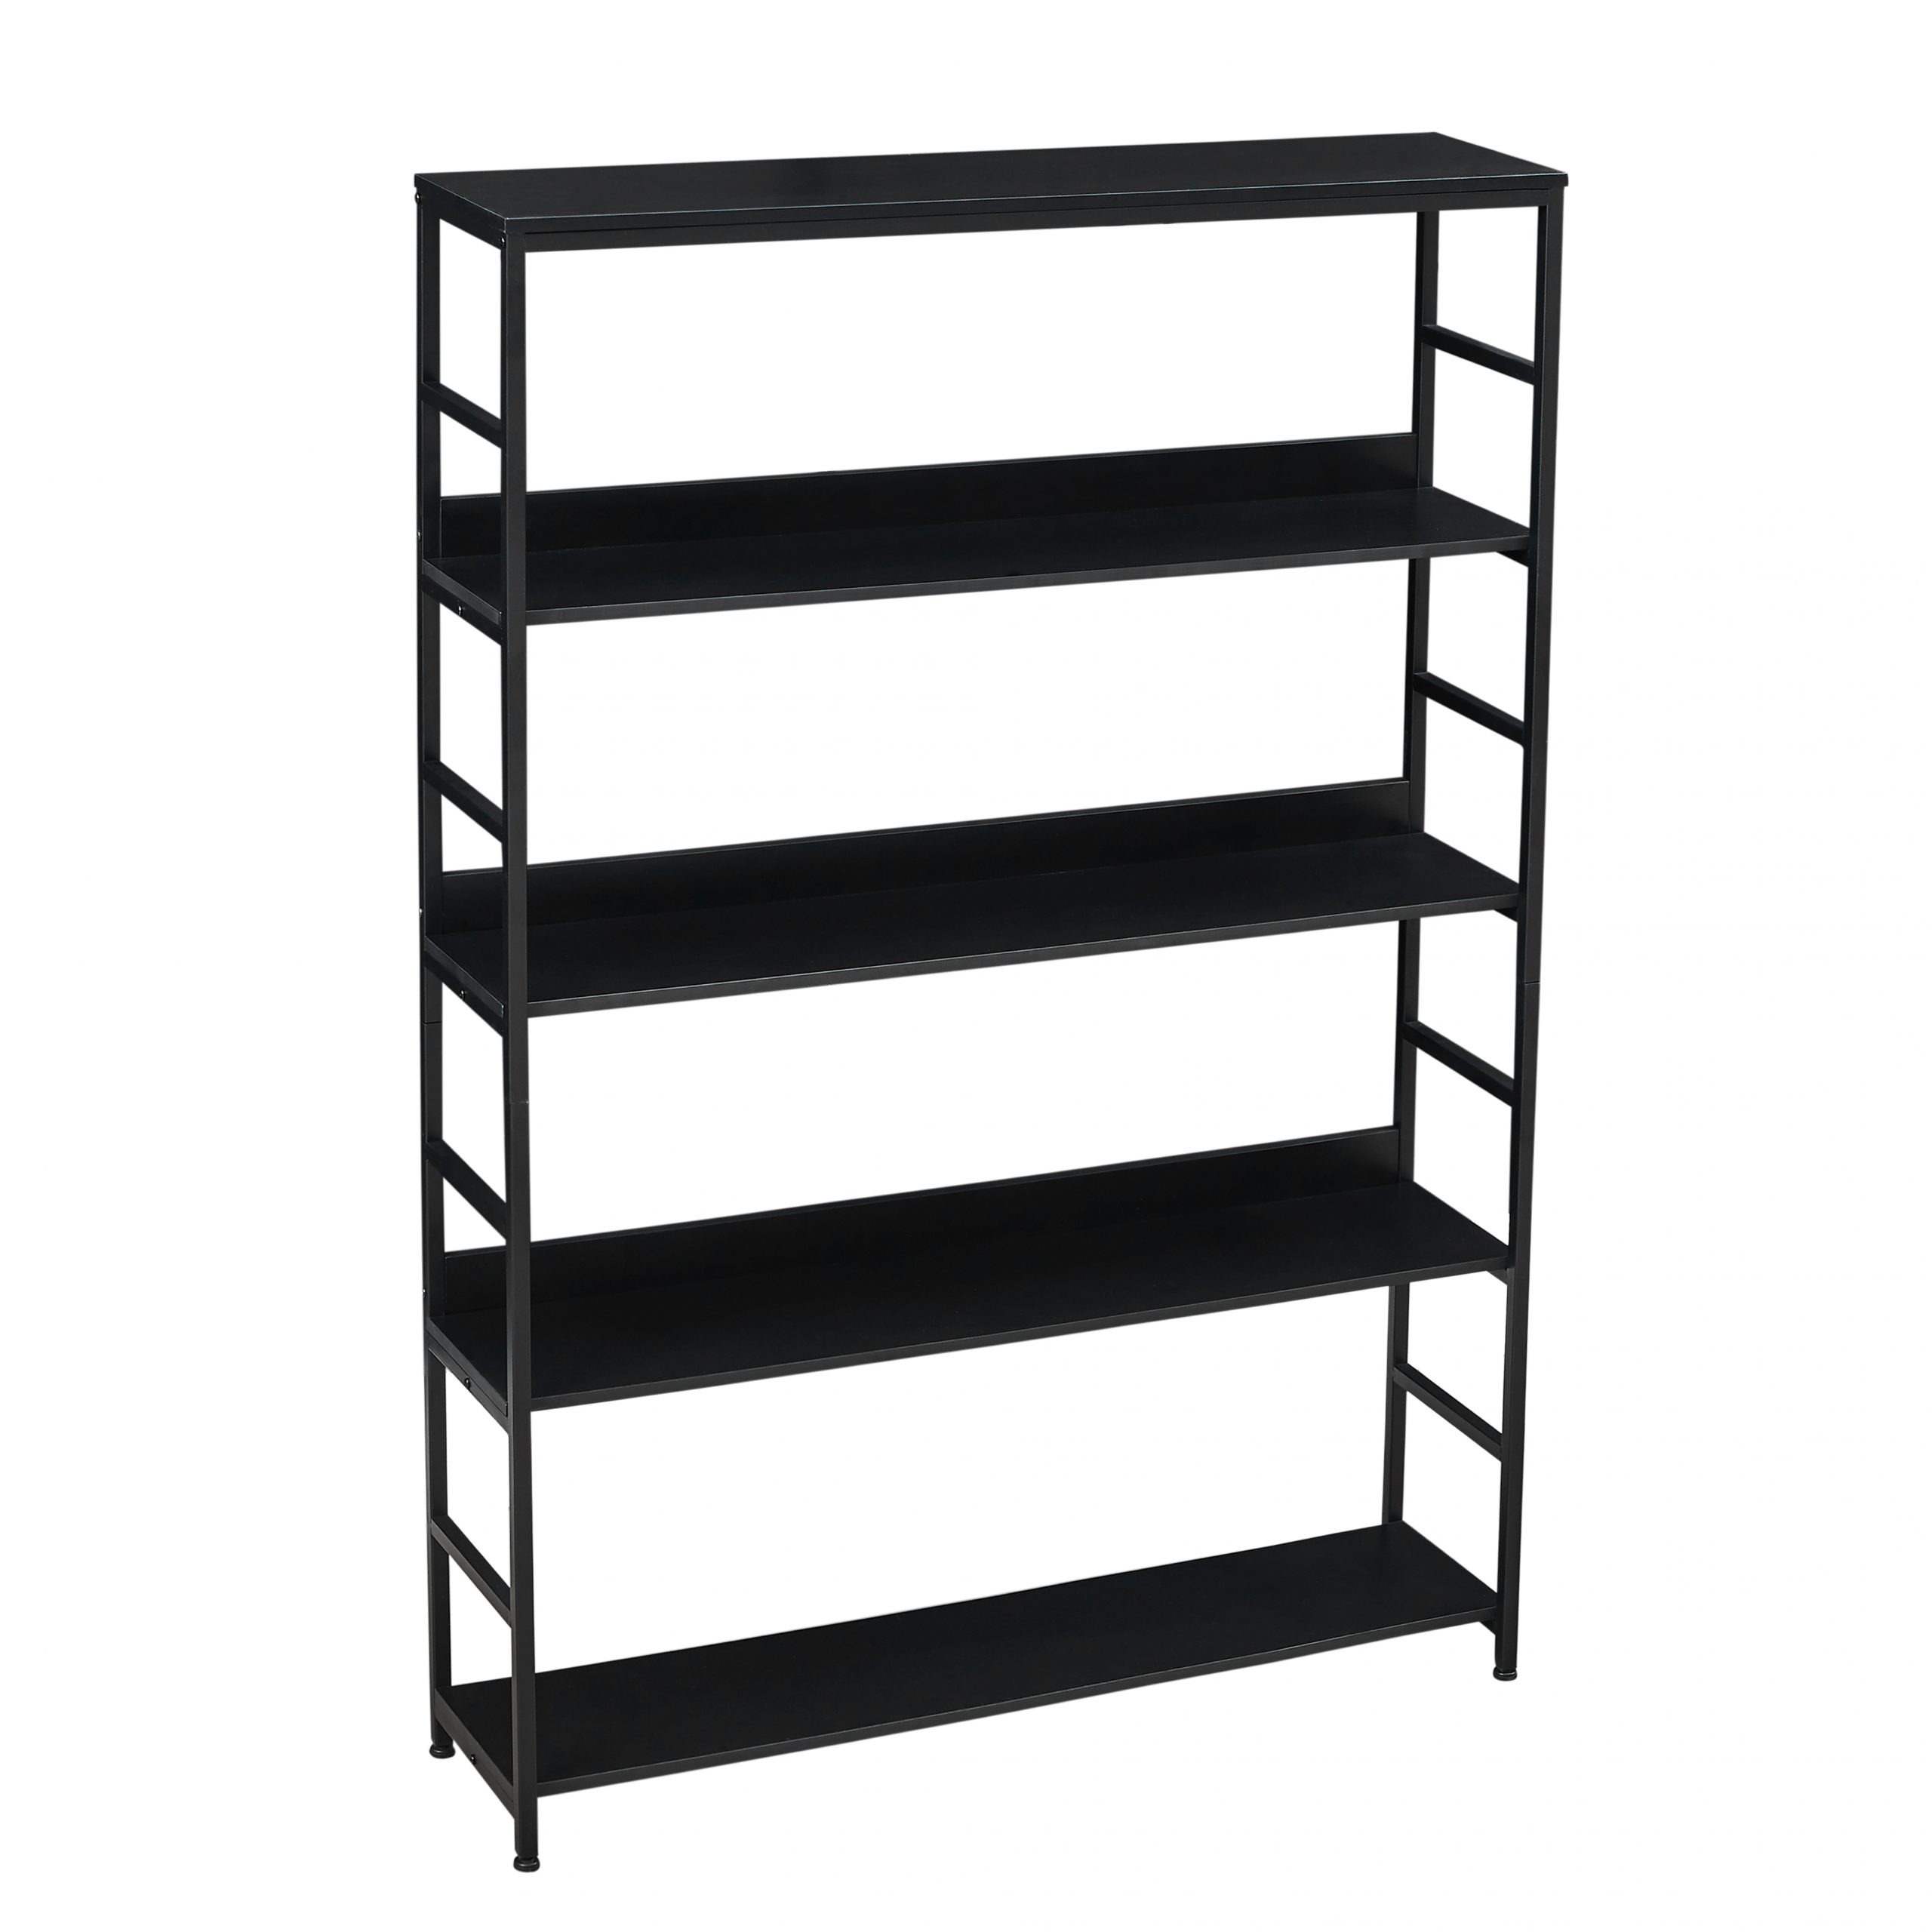 Large 5 Shelf Bookshelf Furniture with Metal Frame - WF286173AAB